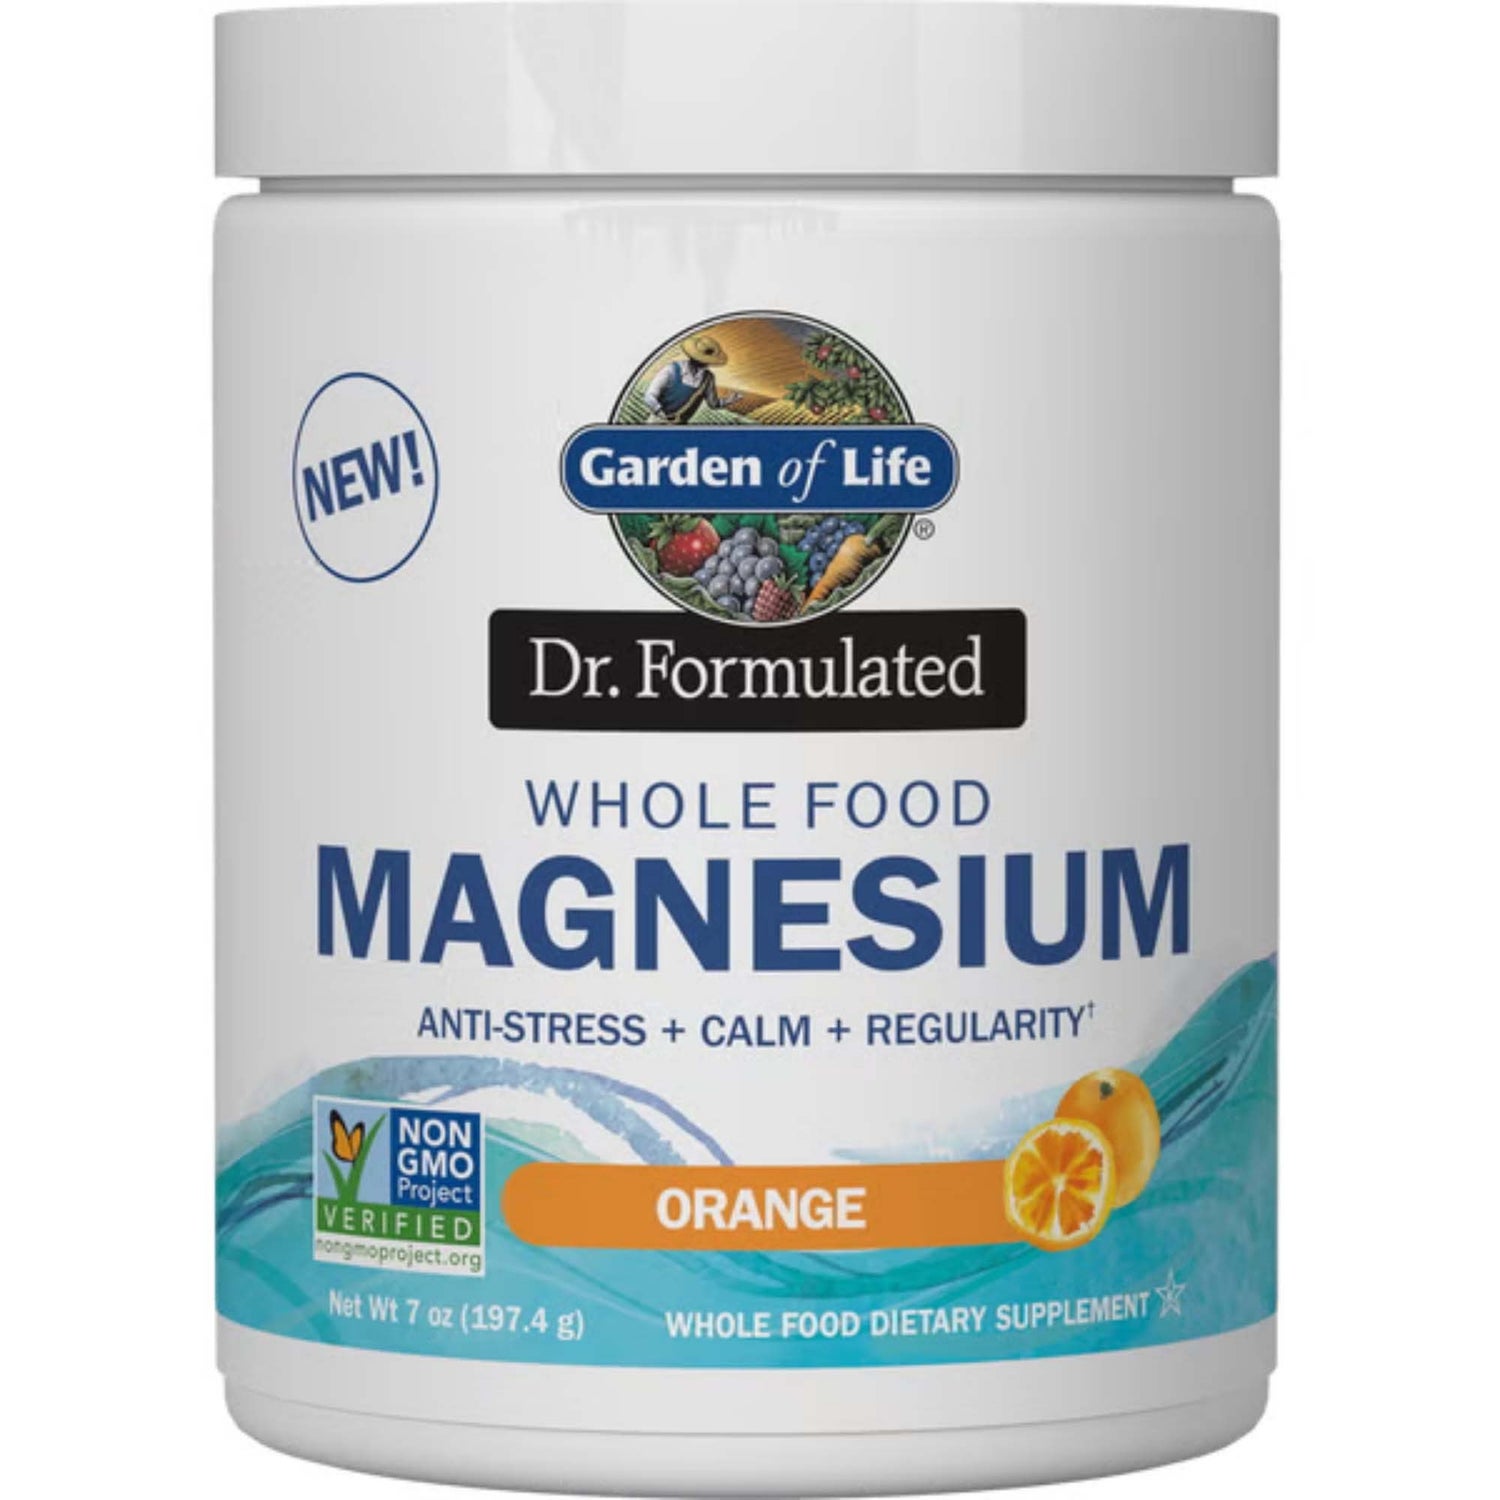 Whole Food Magnesium - Orange - 197.4g